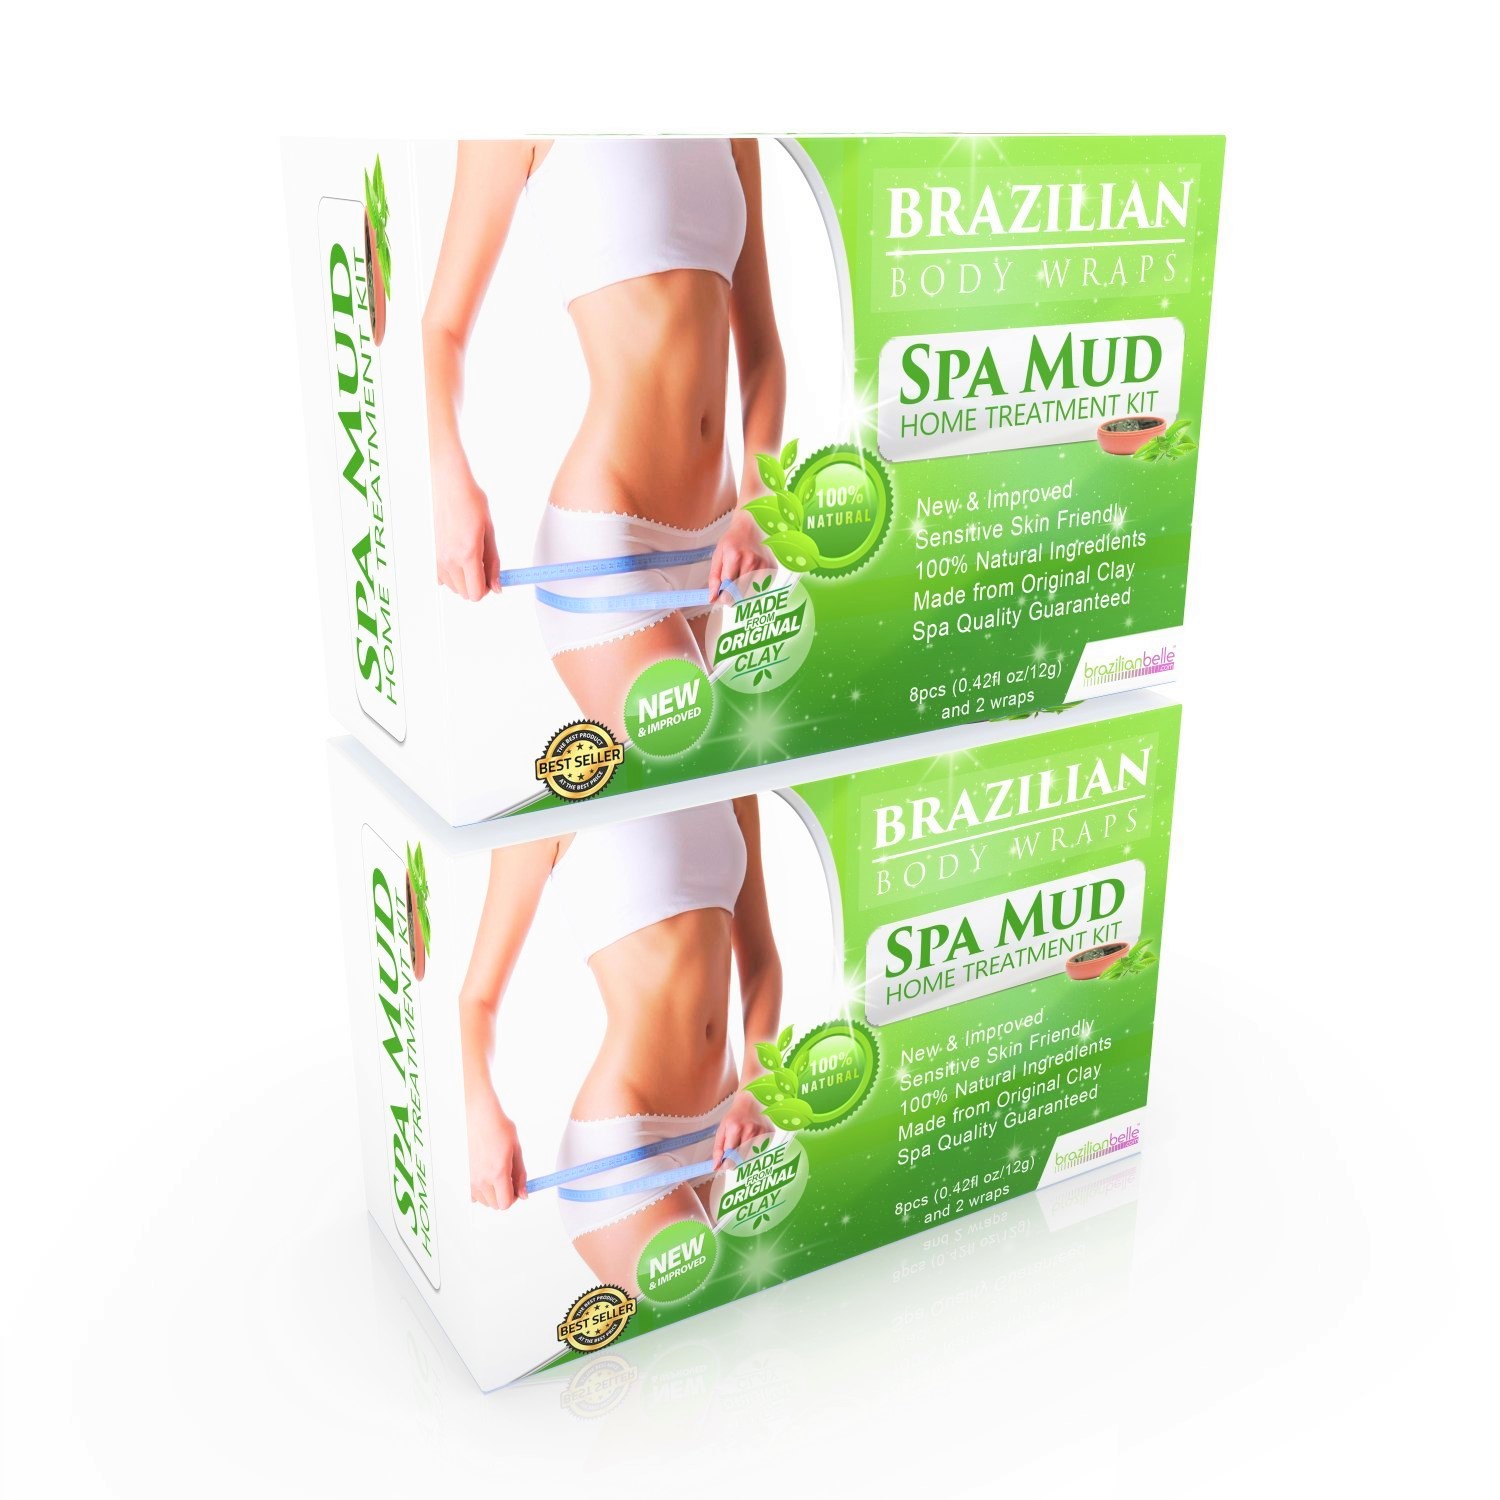 Brazilian Body Wraps - spa mud home treatment kit. 